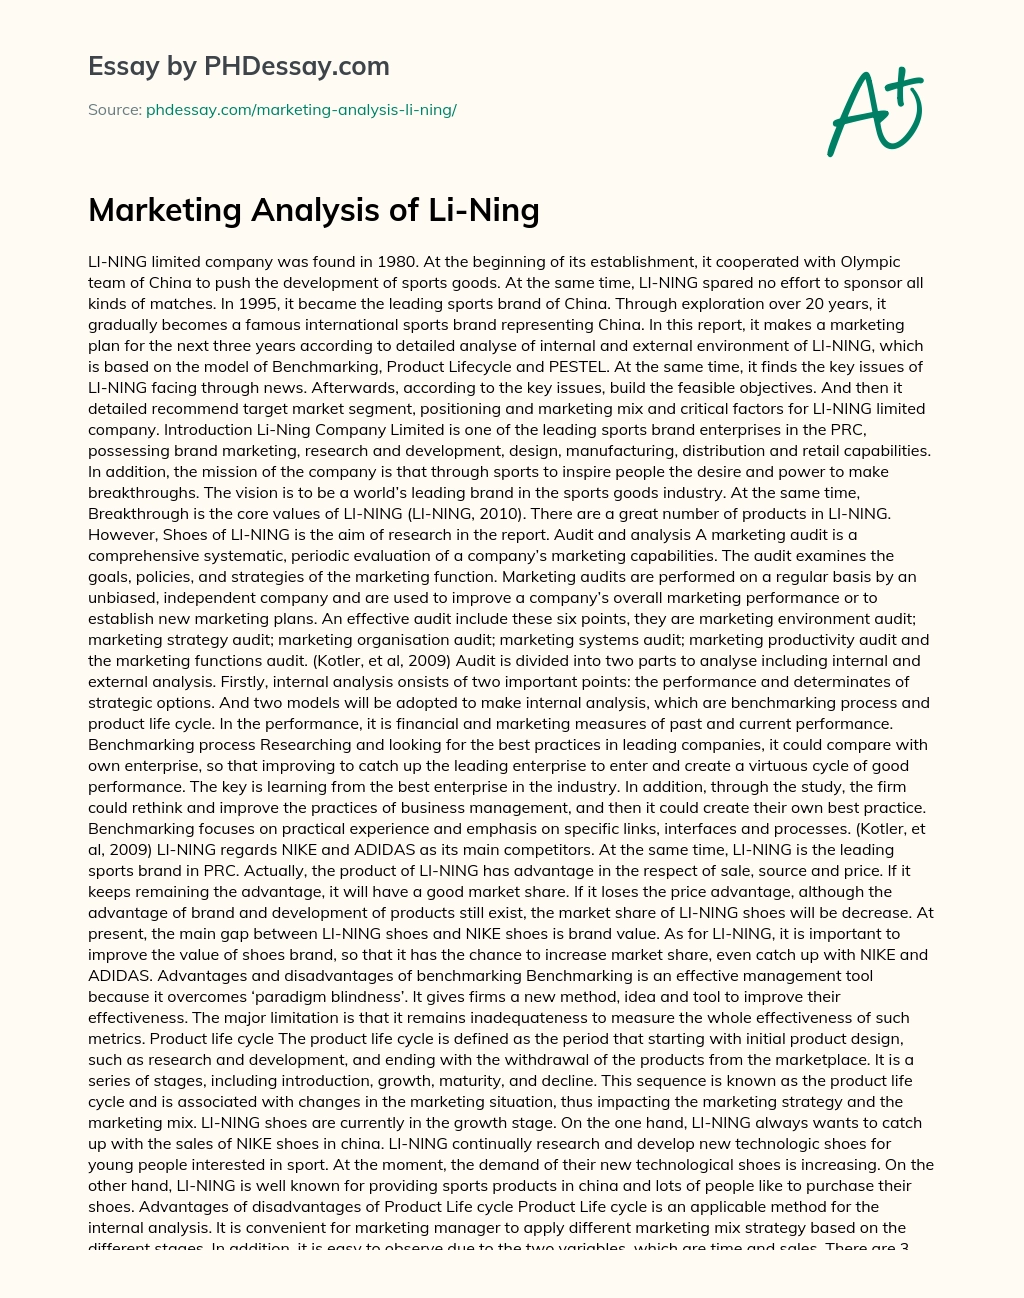 Marketing Analysis of Li-Ning essay